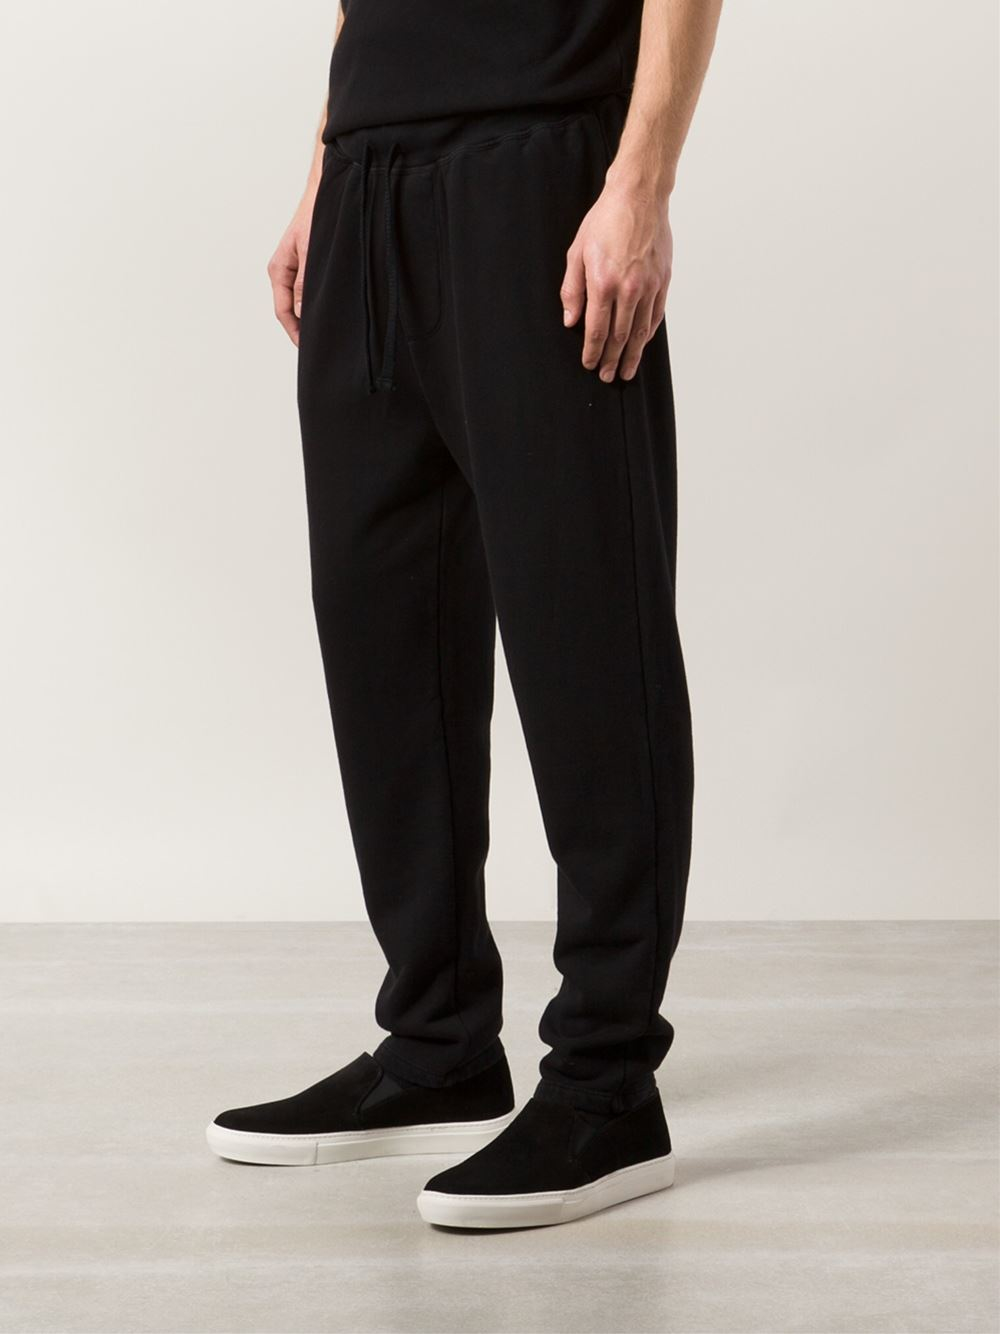 Lyst - Fadeless Back Pocket Track Pants in Black for Men